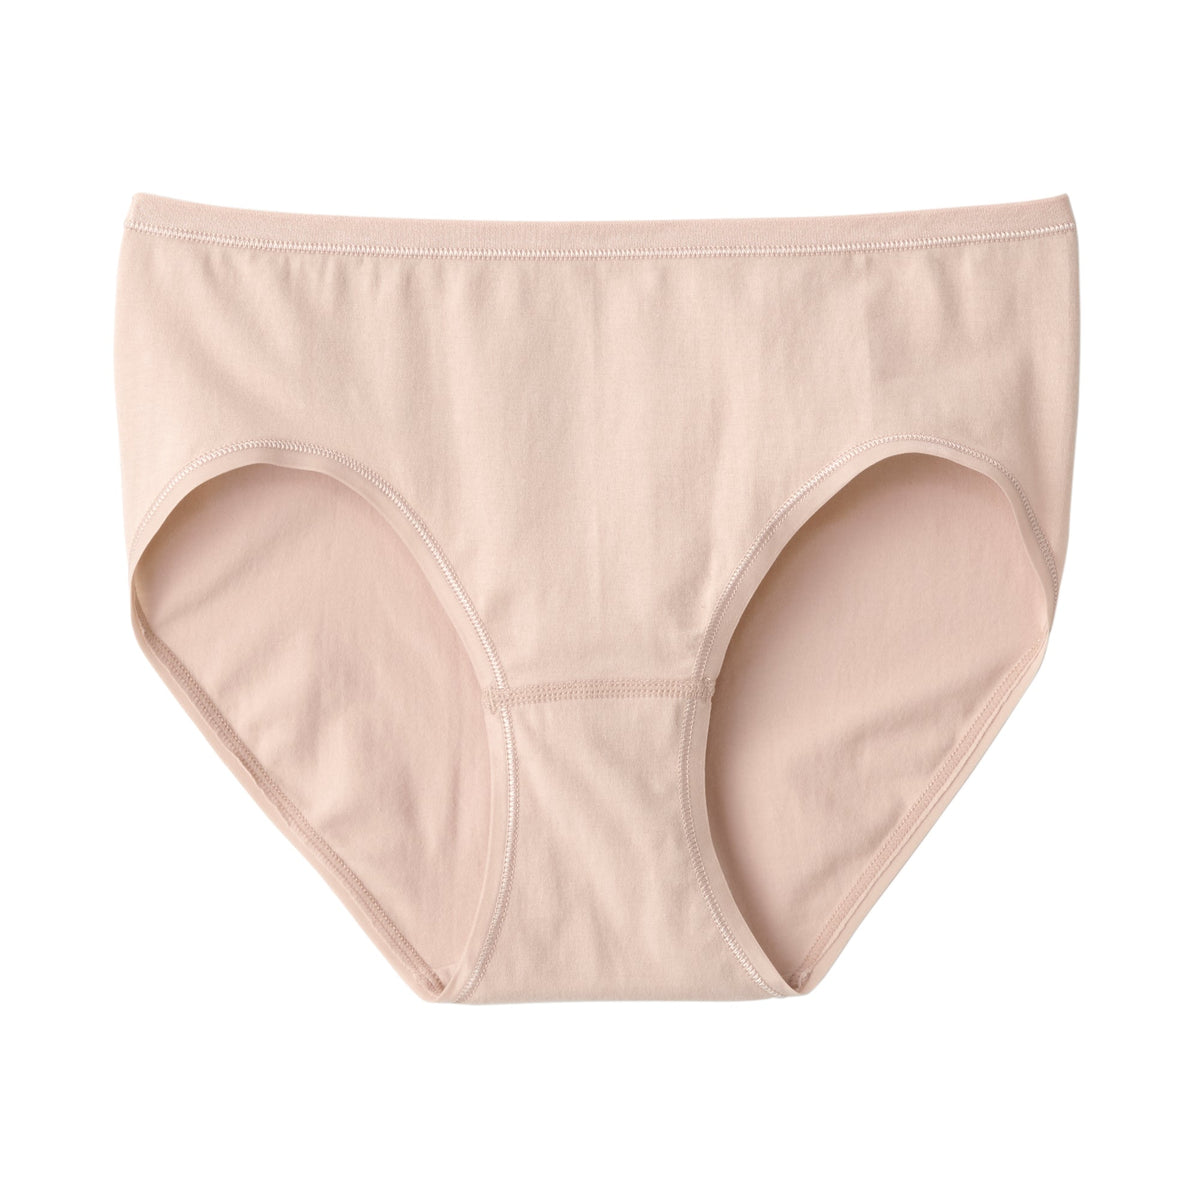 Panty Women Underwear per piece. Plain for ladies stretch ( Random